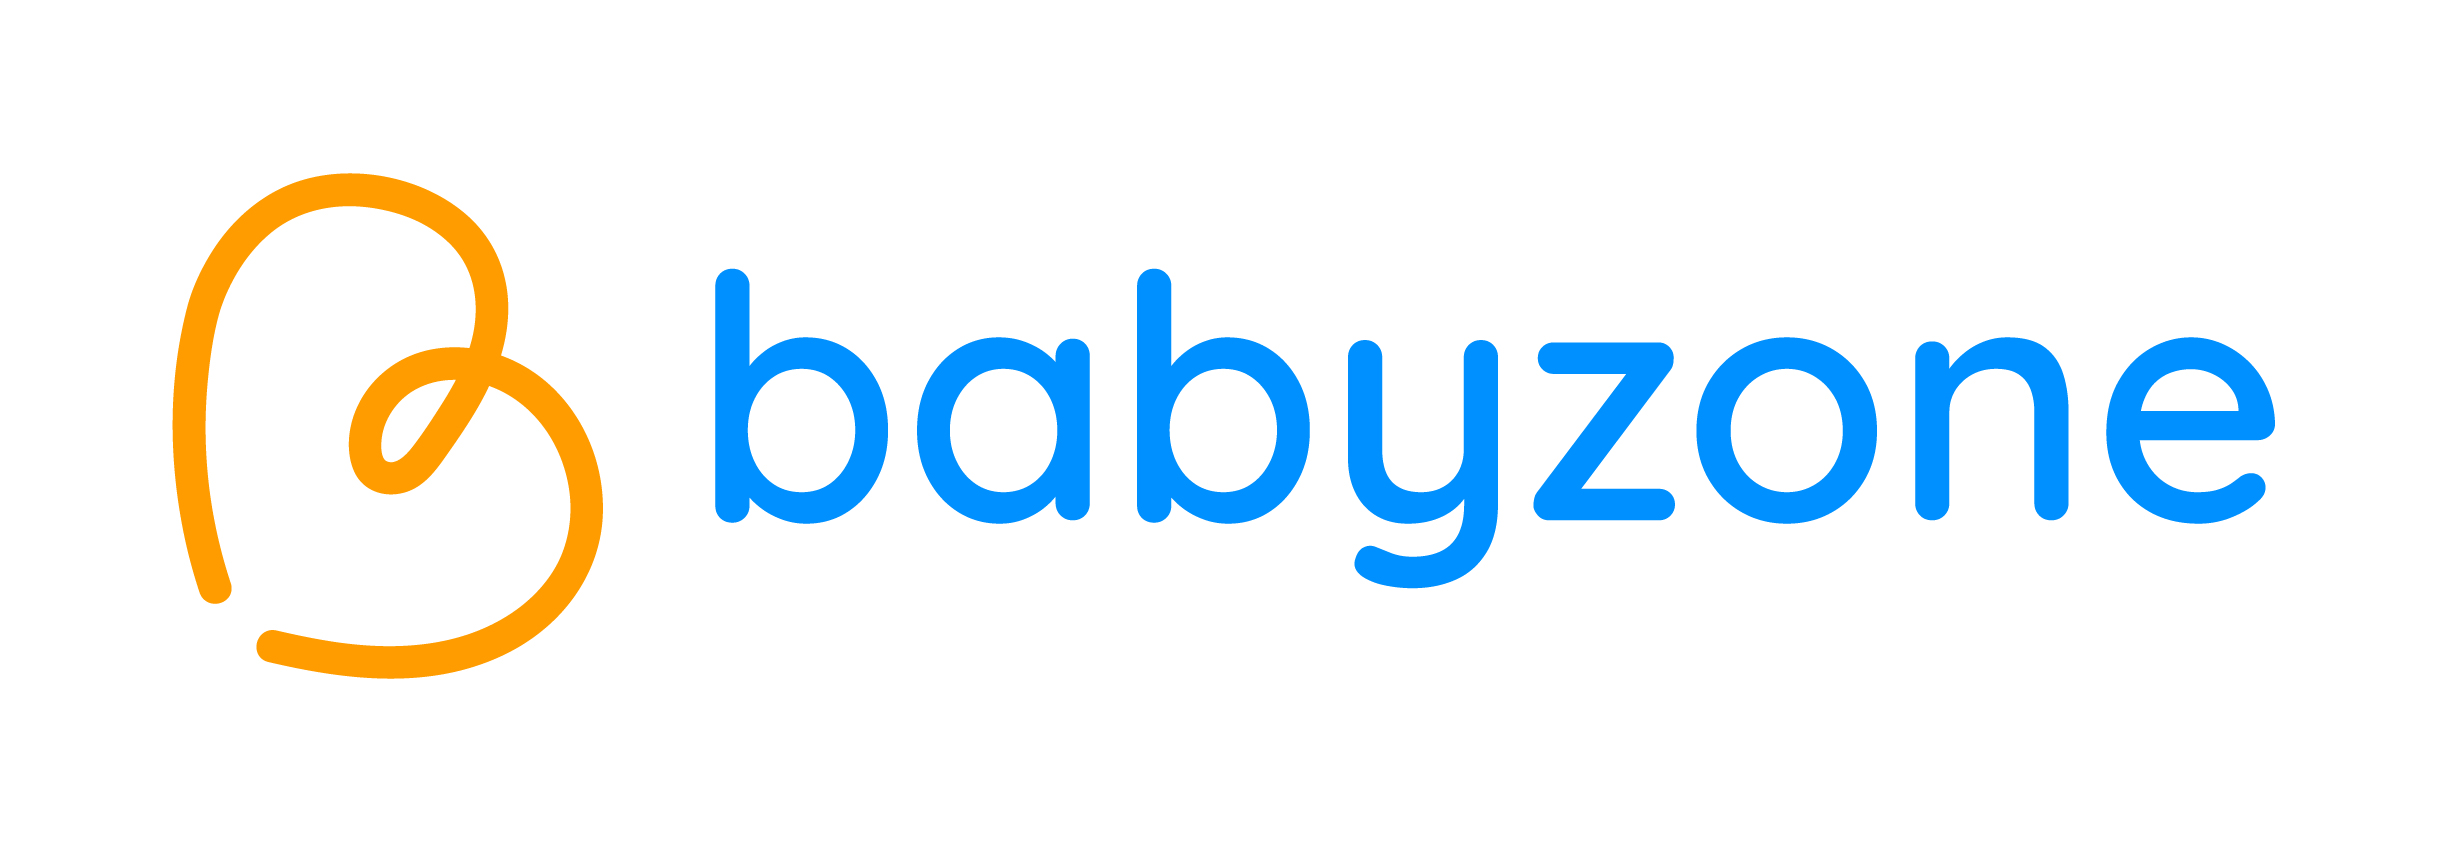 logo for Babyzone